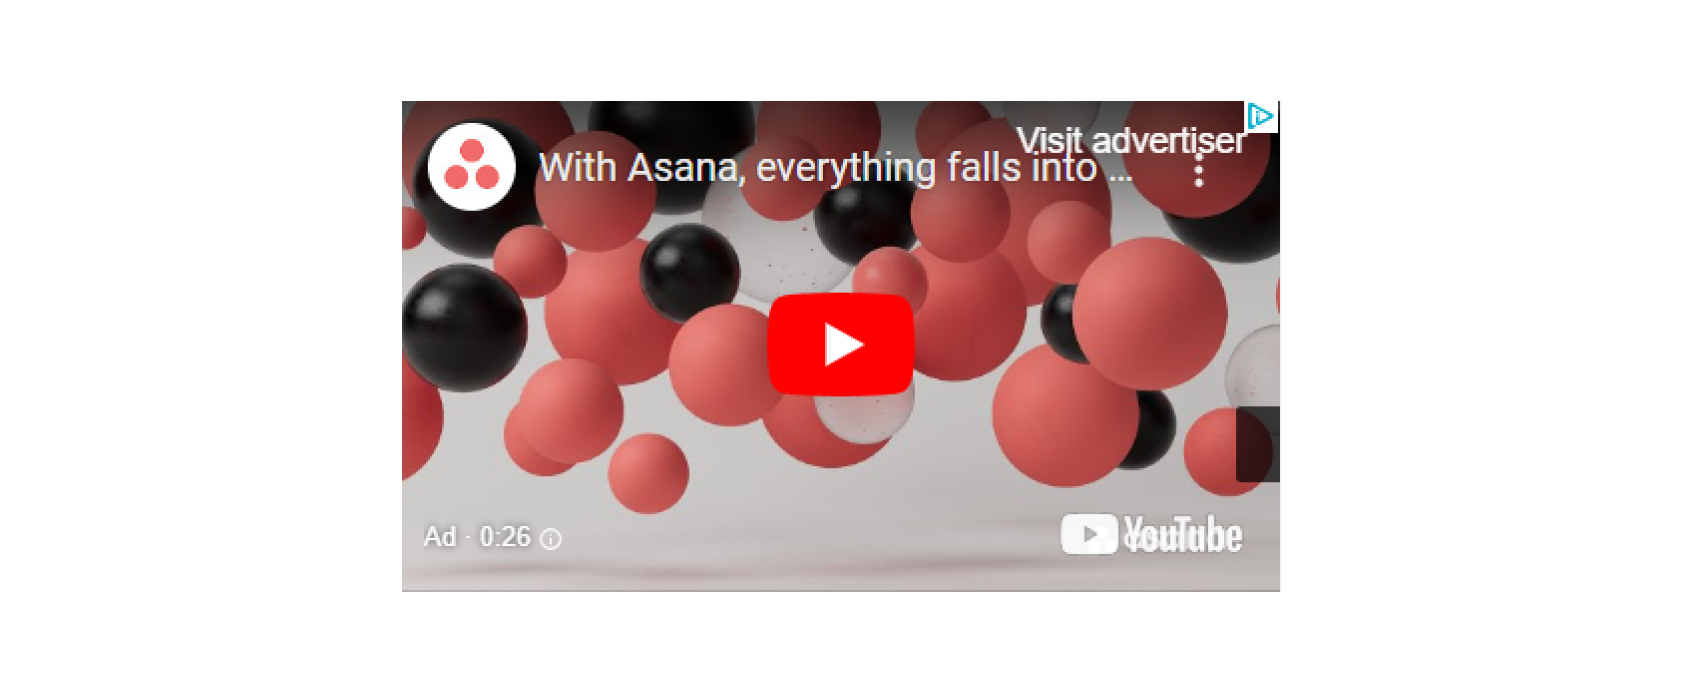 Asana Google video ad